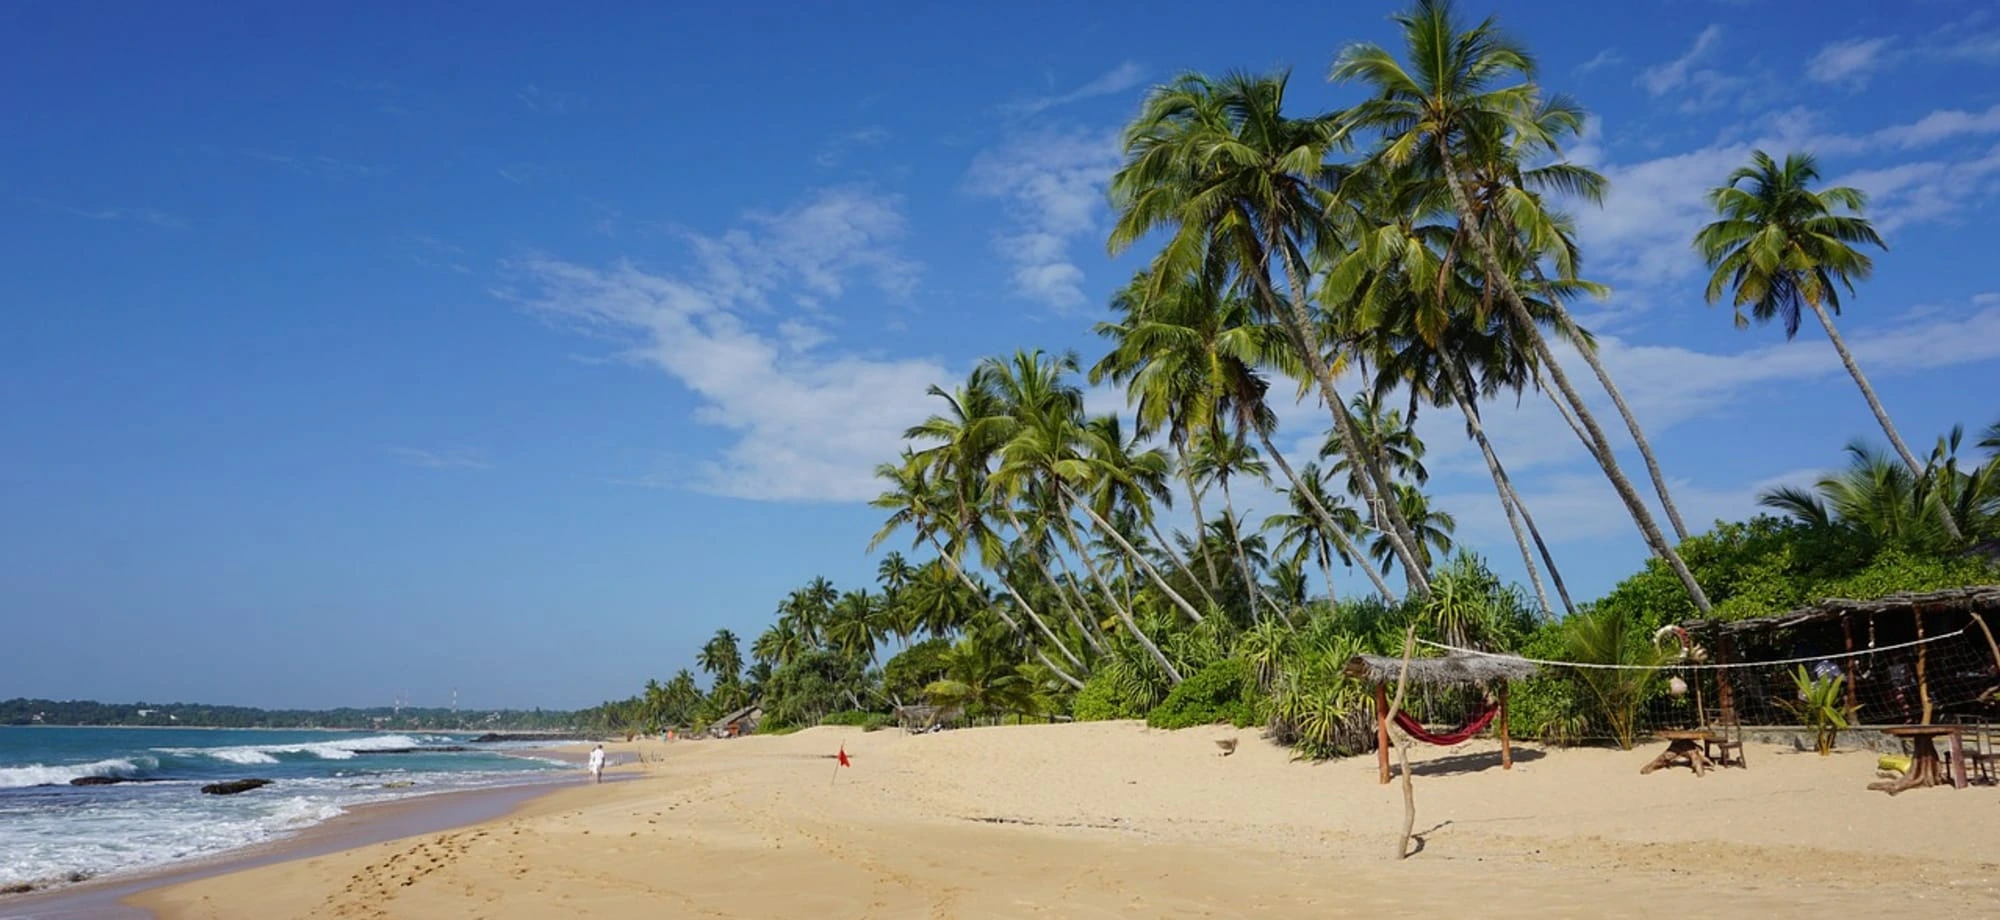 Tangalle_Sri_Lanka_Beach_Unsplash_cc_Maxos_Dim_nrr1lq